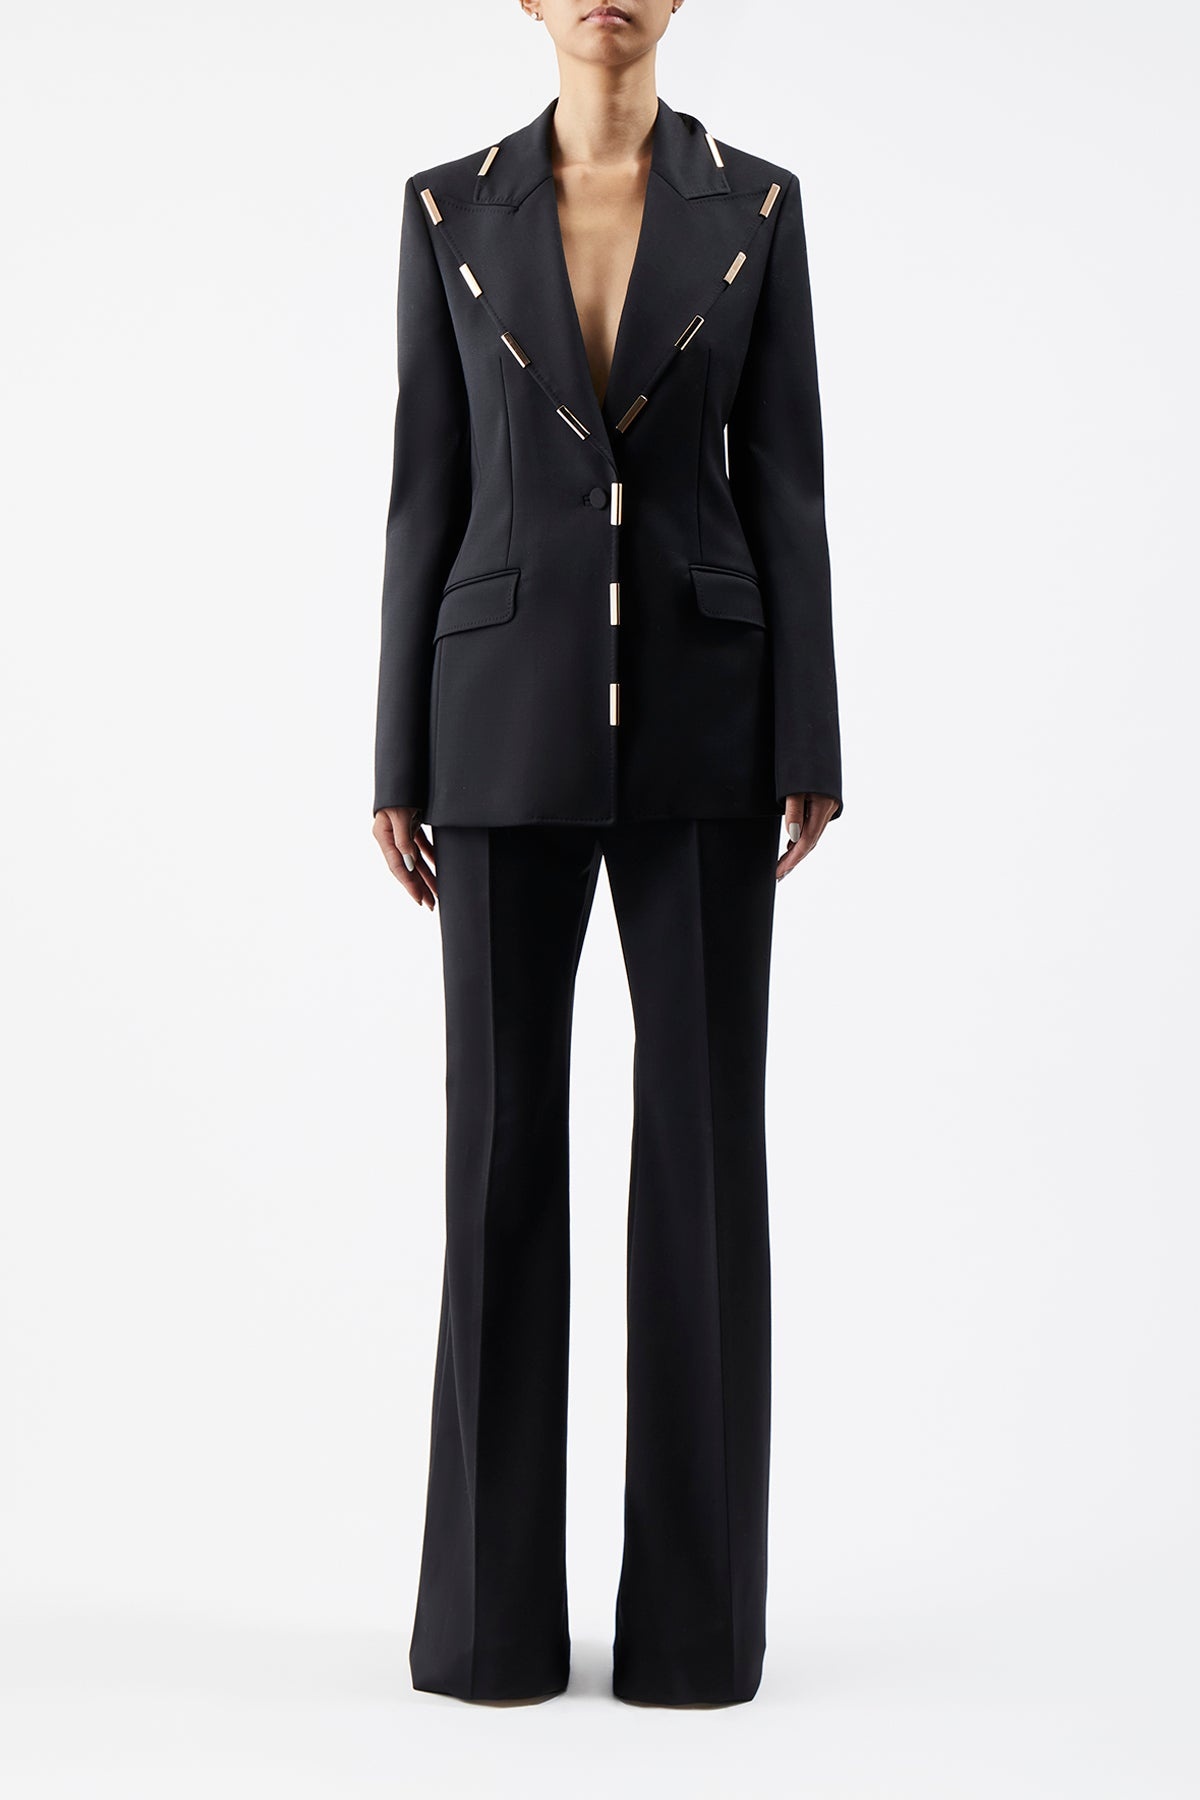 Leiva Blazer in Black Sportswear Wool with Gold Bars - 3